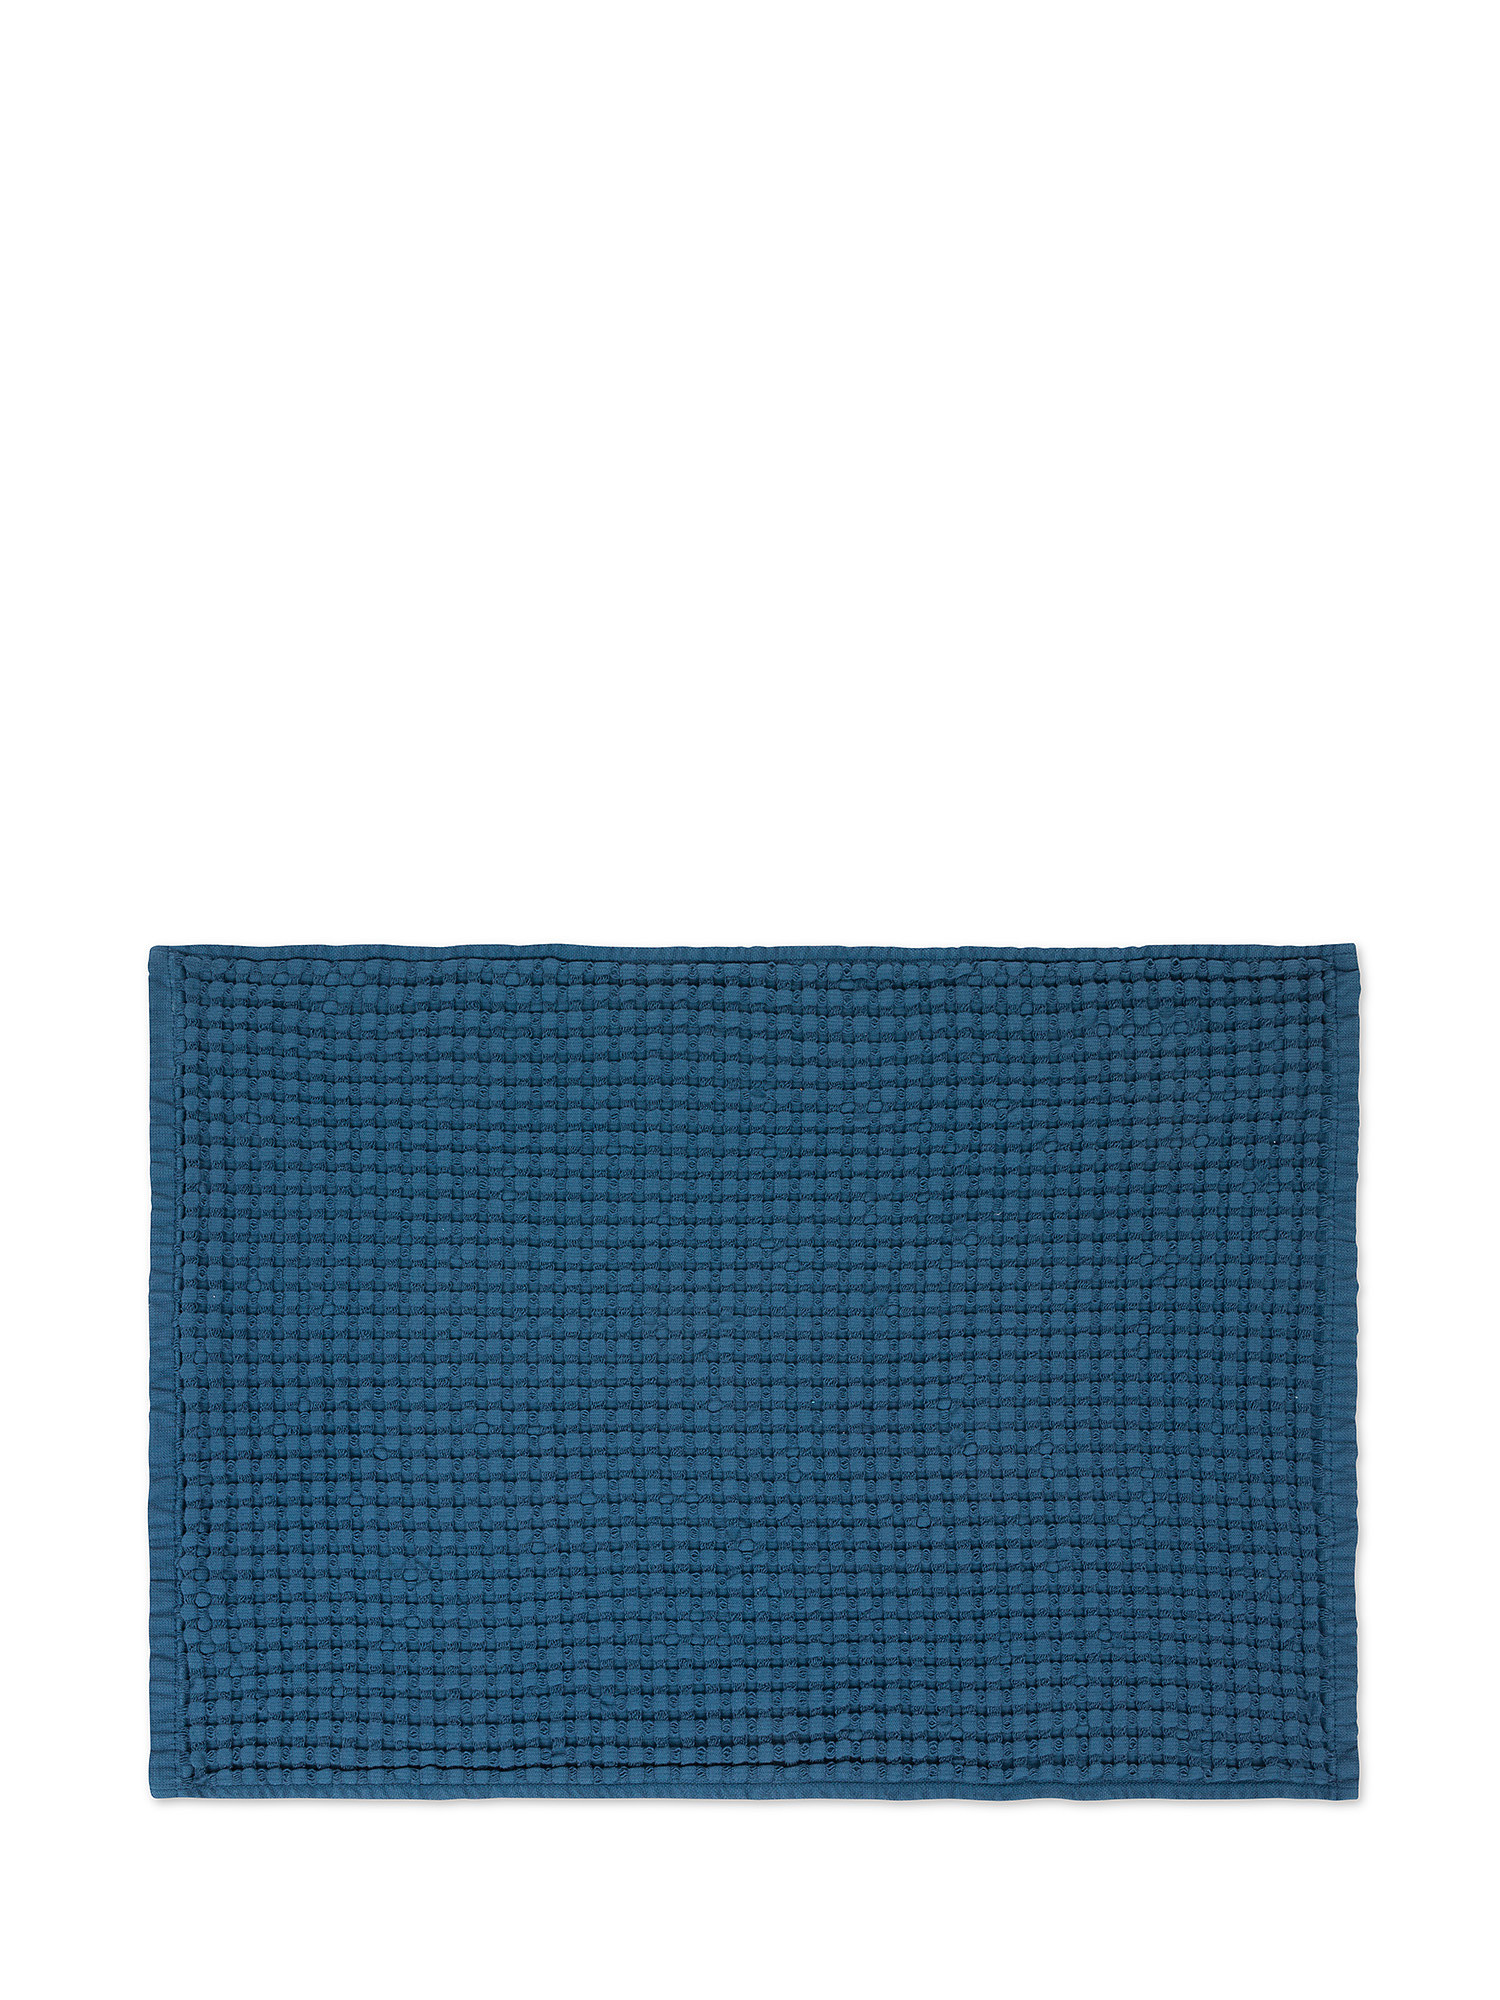 Asciugamano cotone nido d'ape, Blu scuro, large image number 1